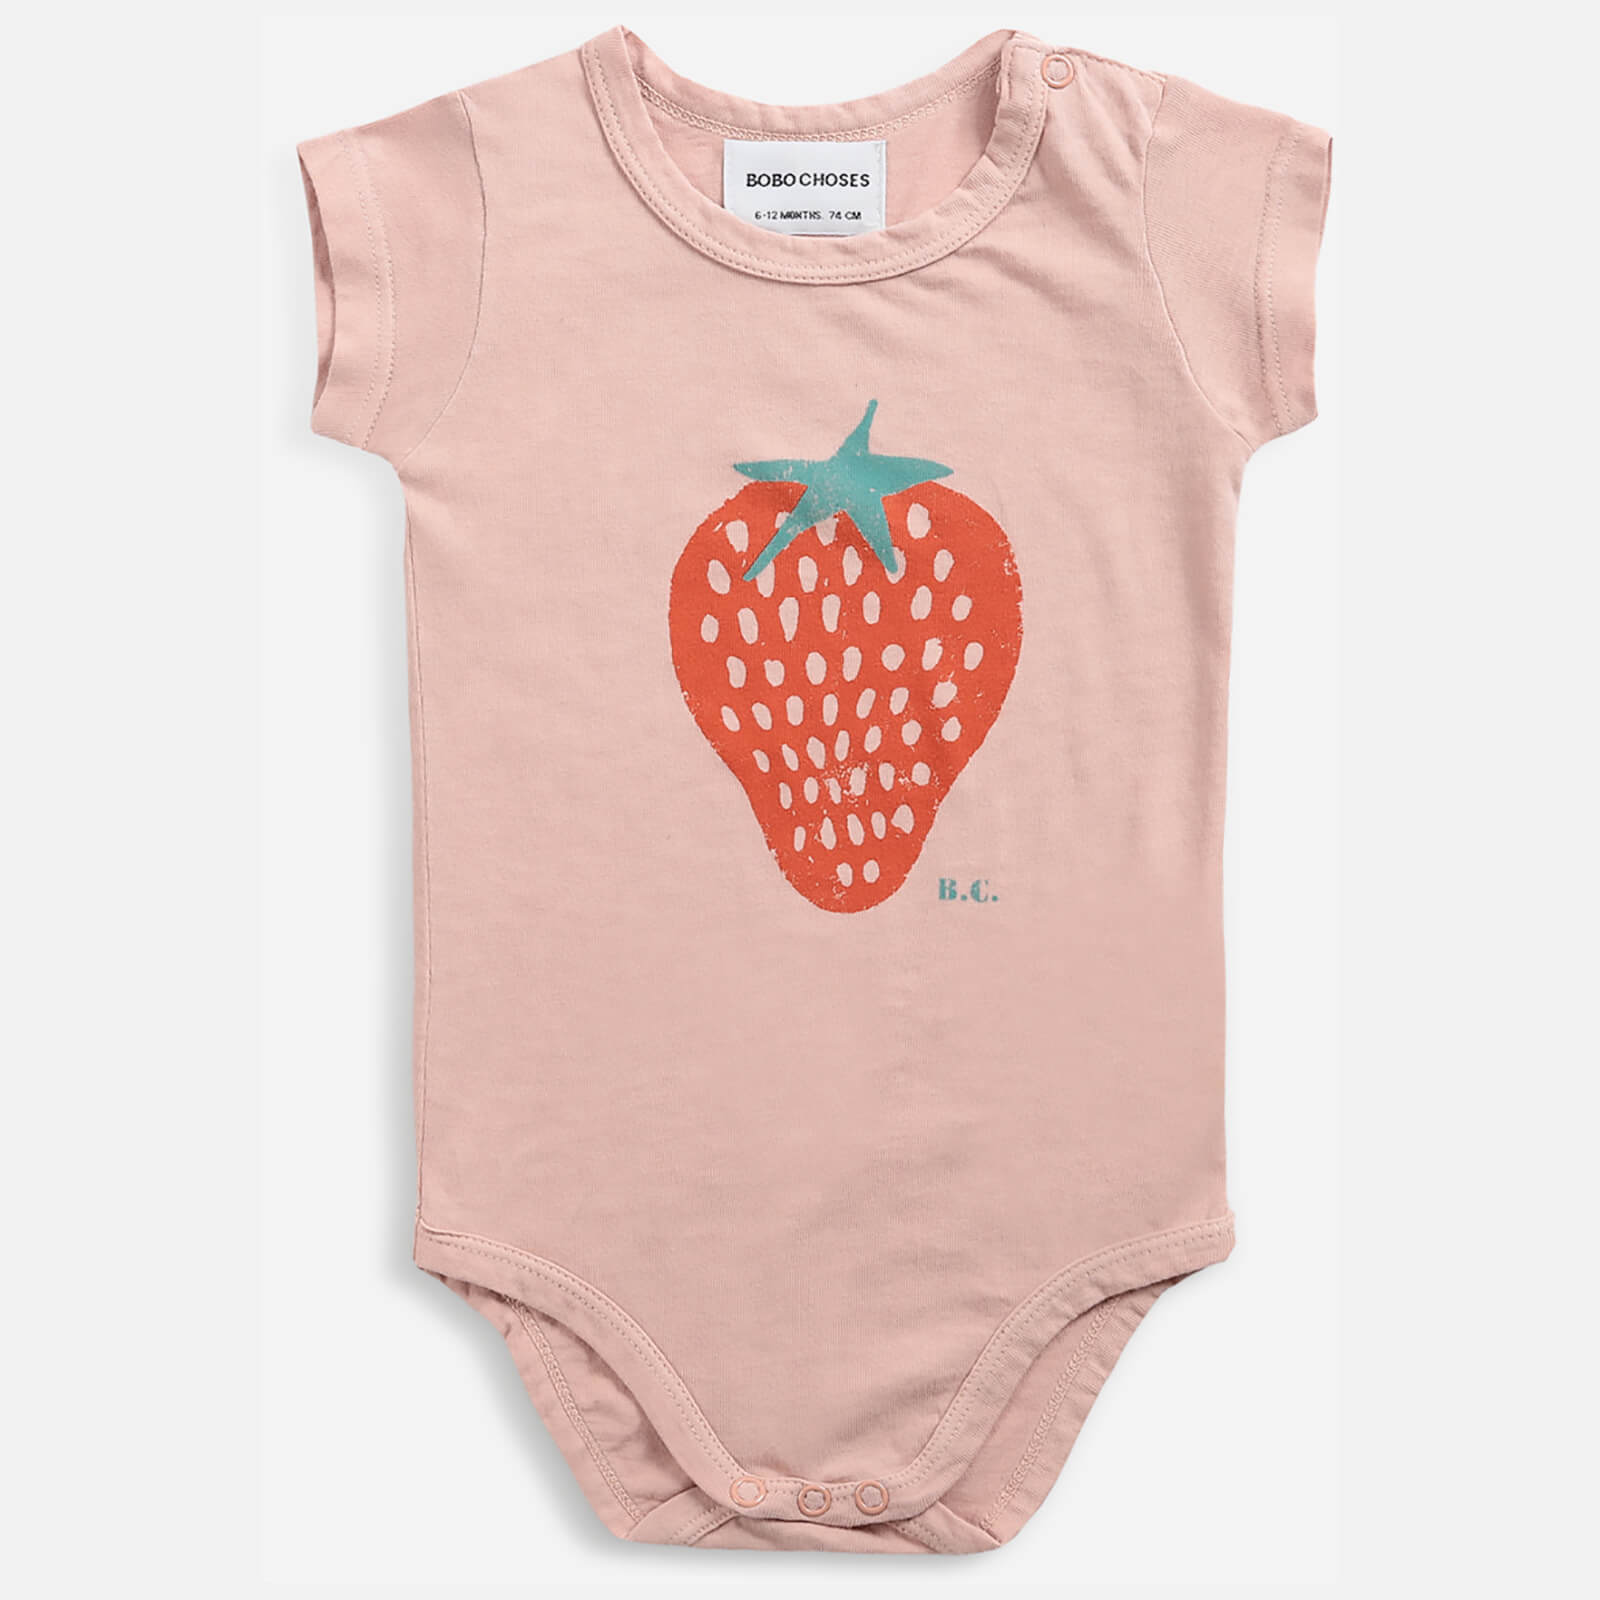 Bobo Choses Baby Strawberry Short Sleeve Body - 6-12 months